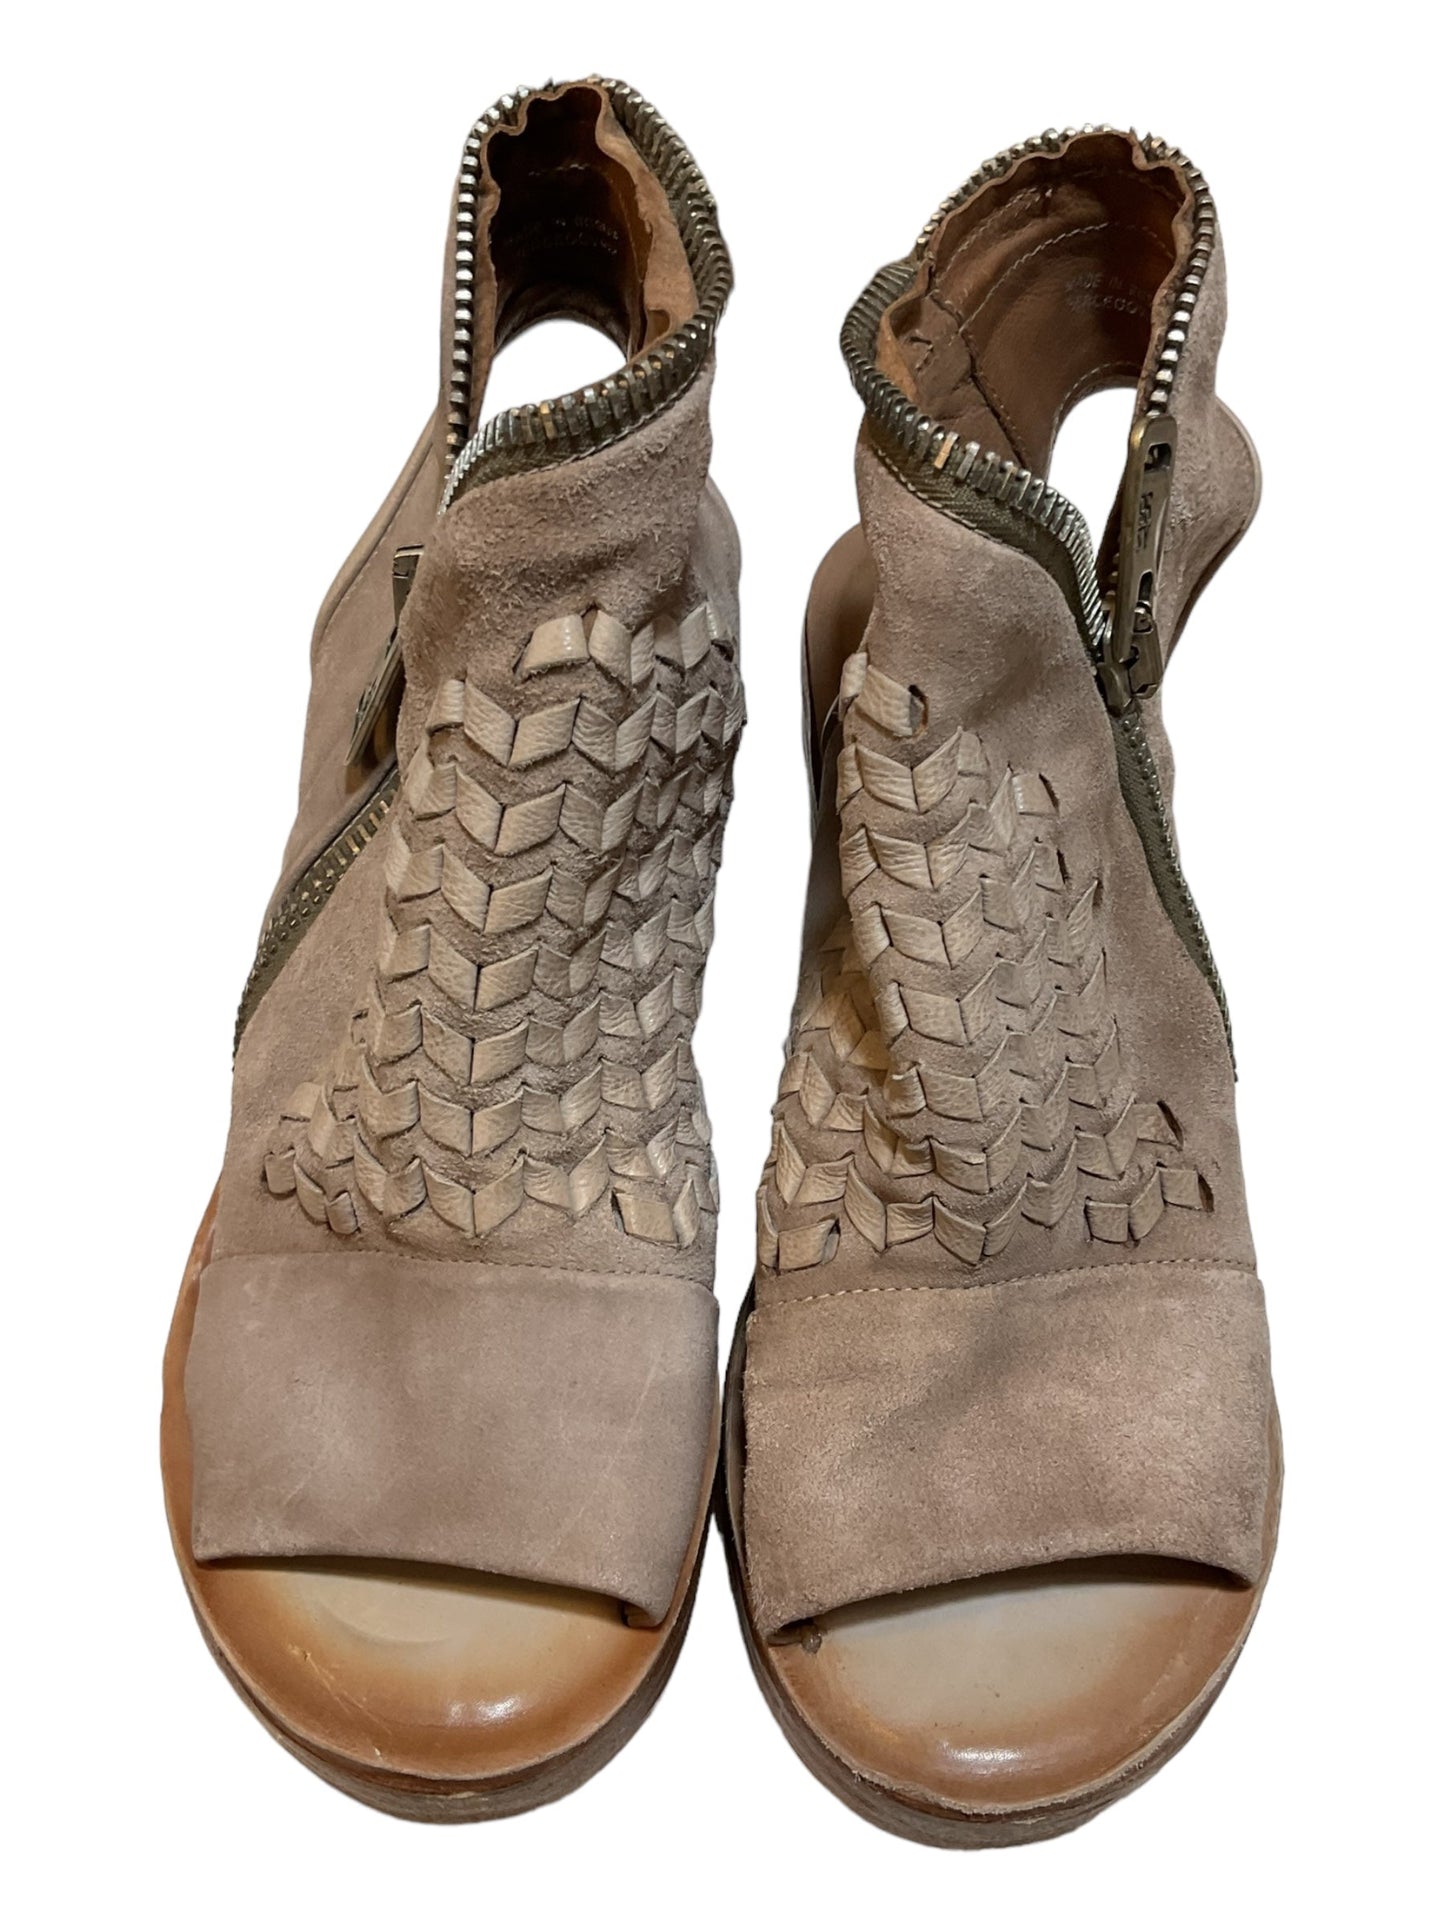 Tan Sandals Heels Wedge Cma, Size 8.5